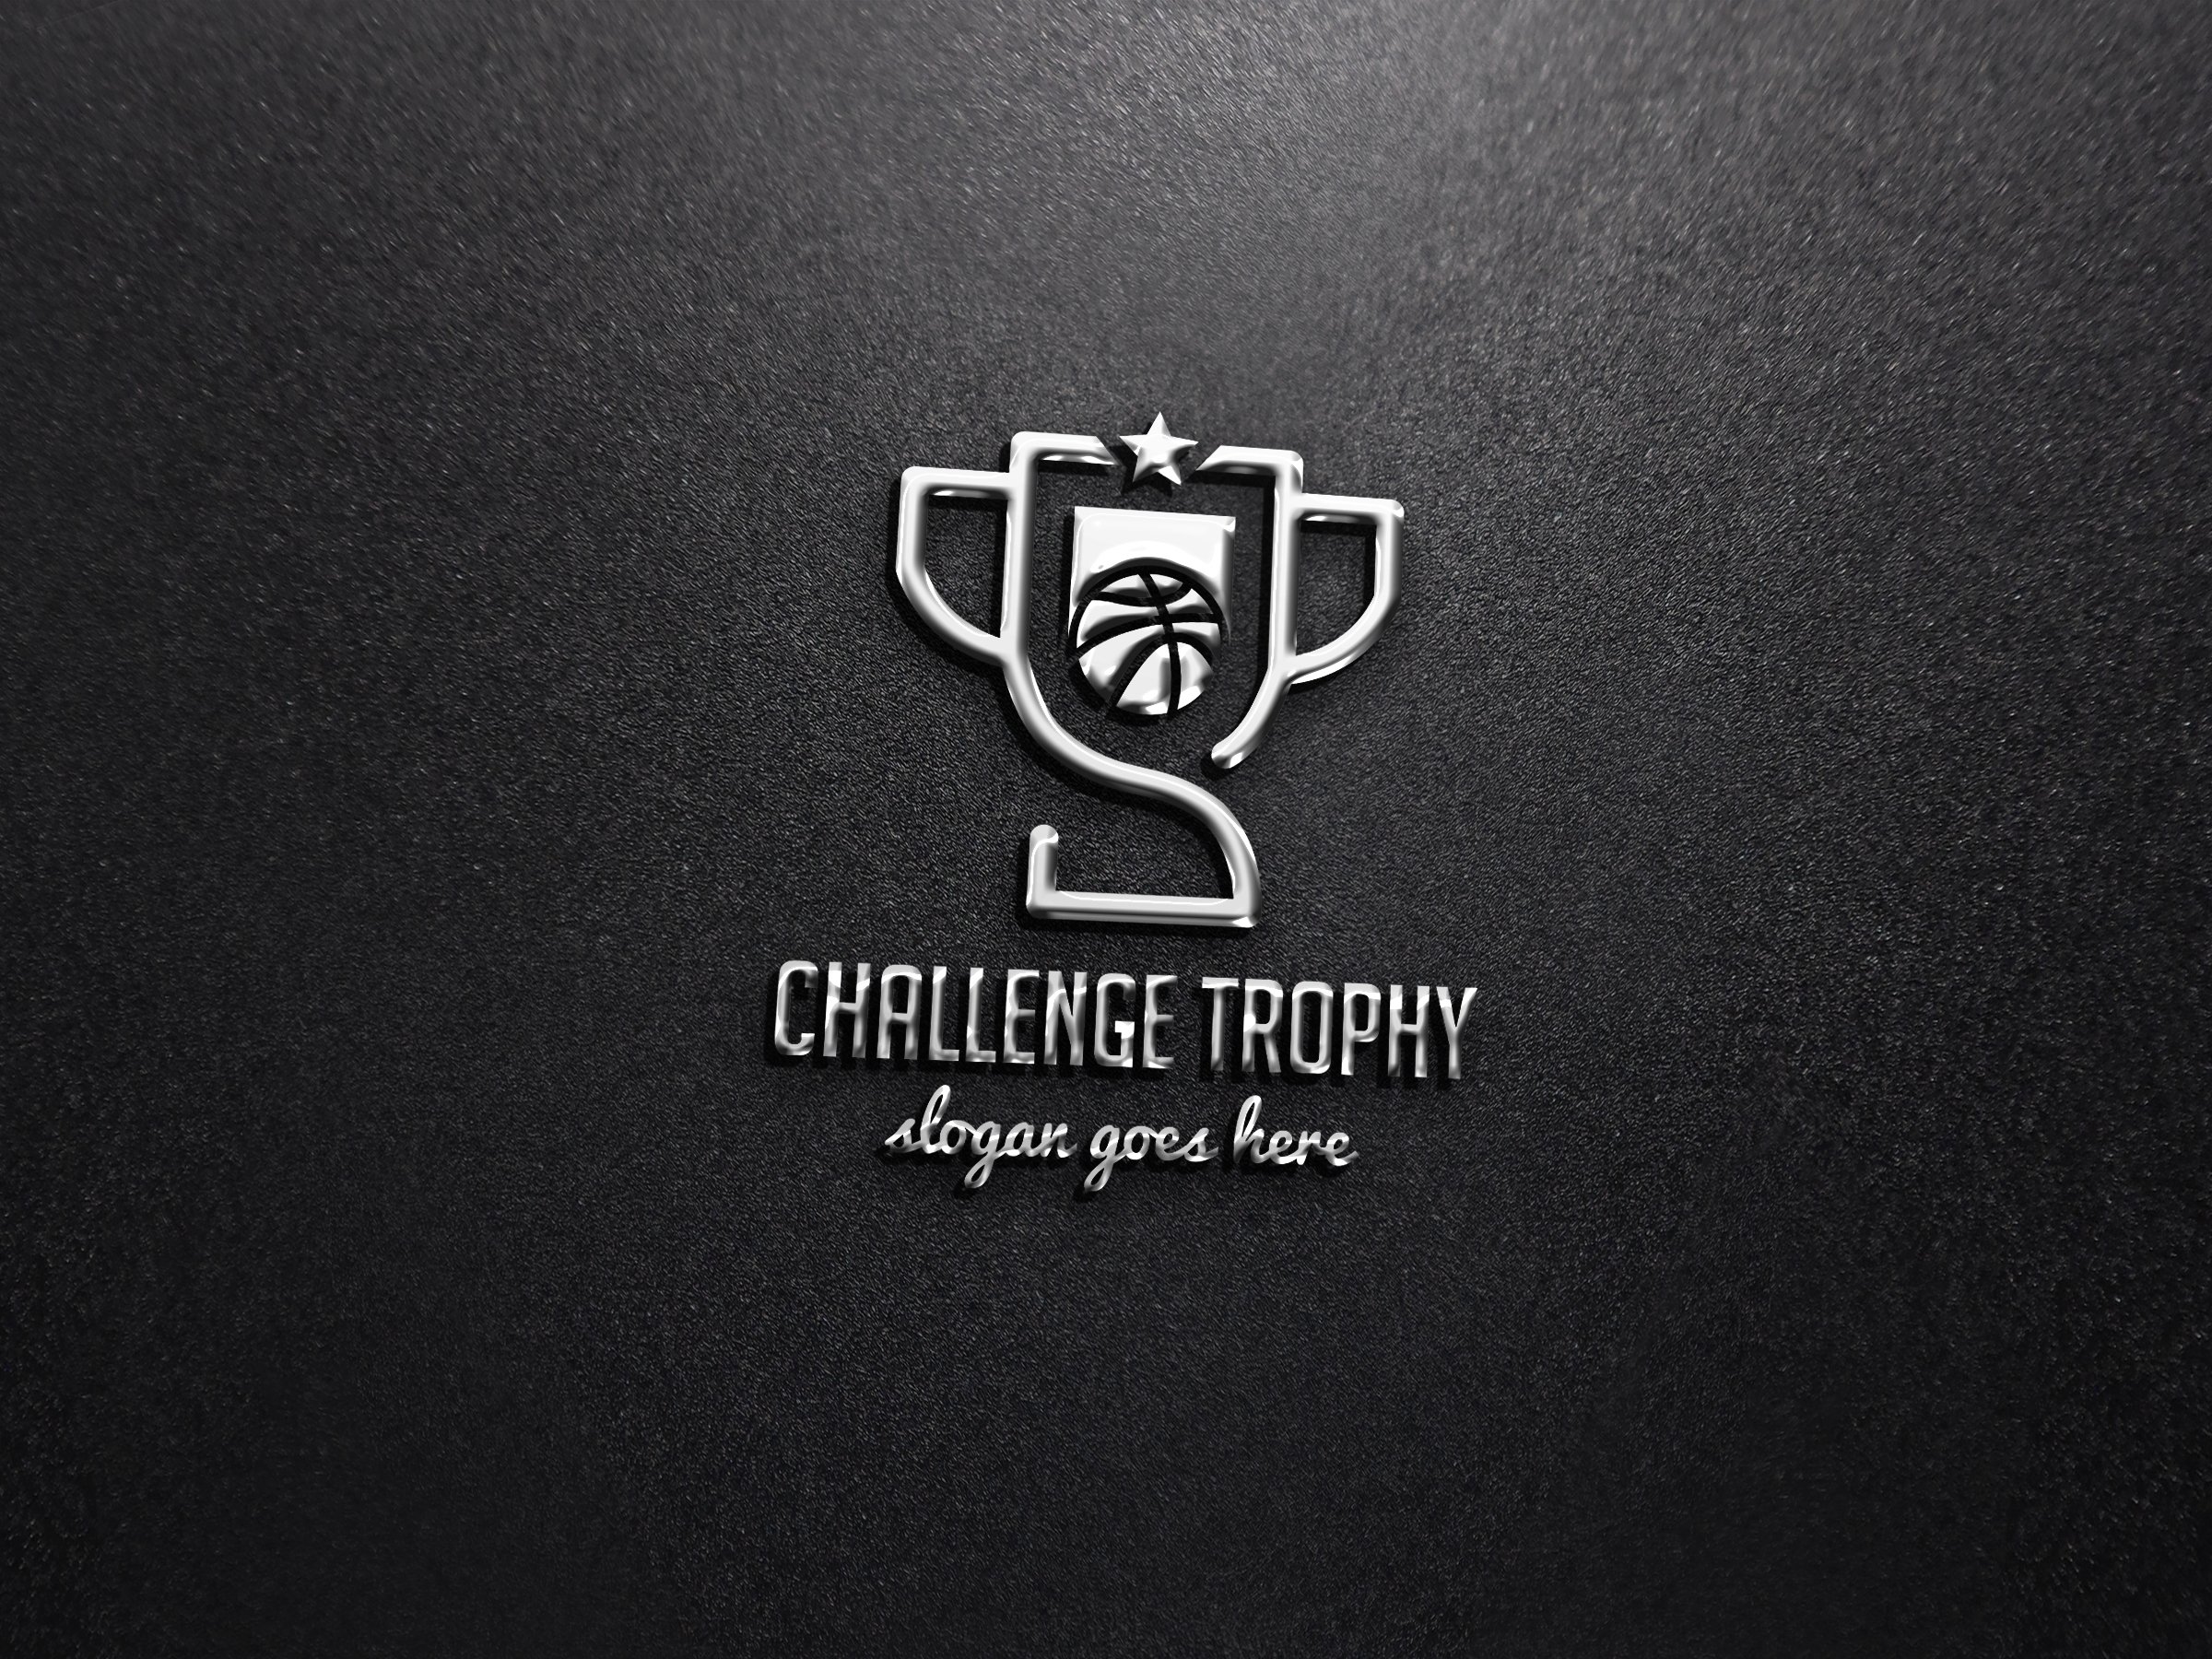 Black matte paper with silver trophy logo.